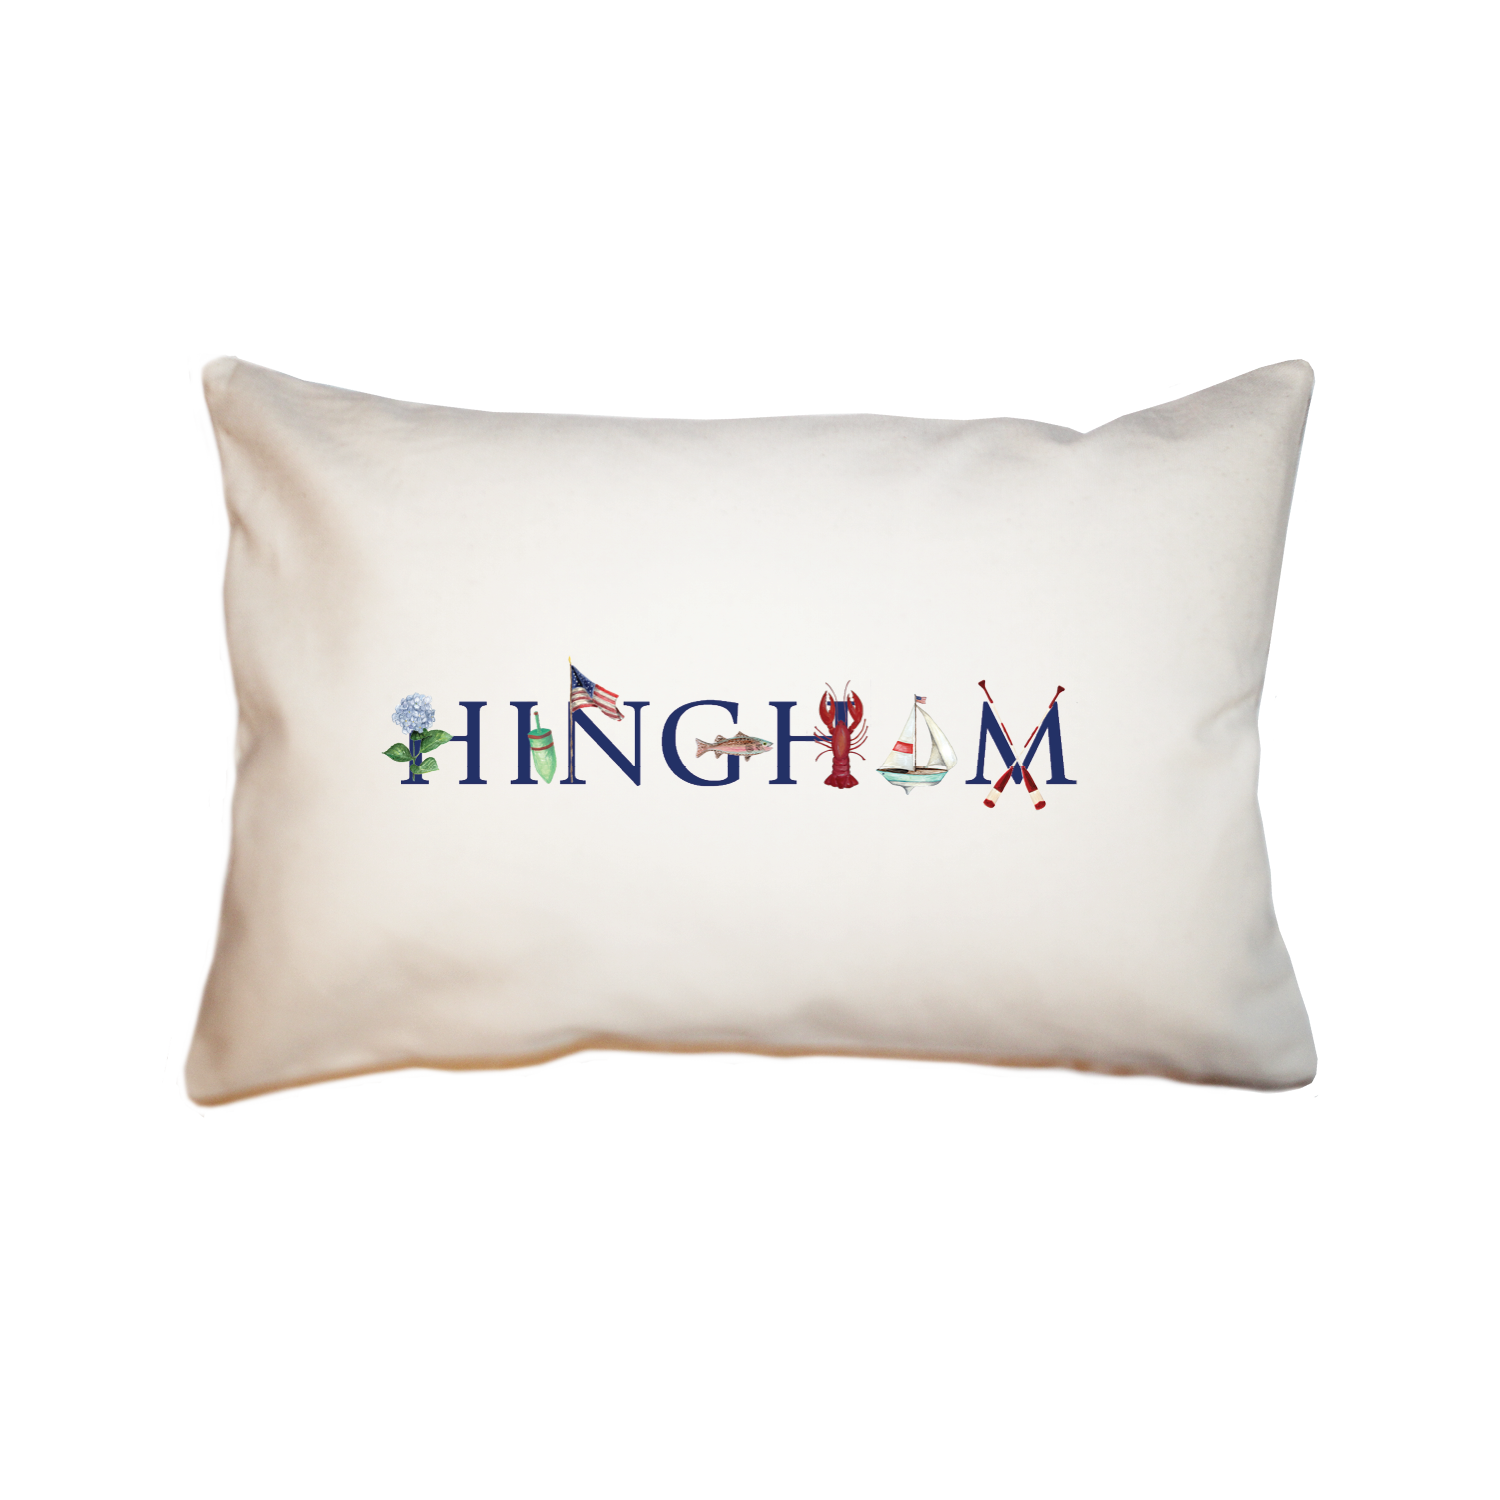 Hingham large rectangle pillow